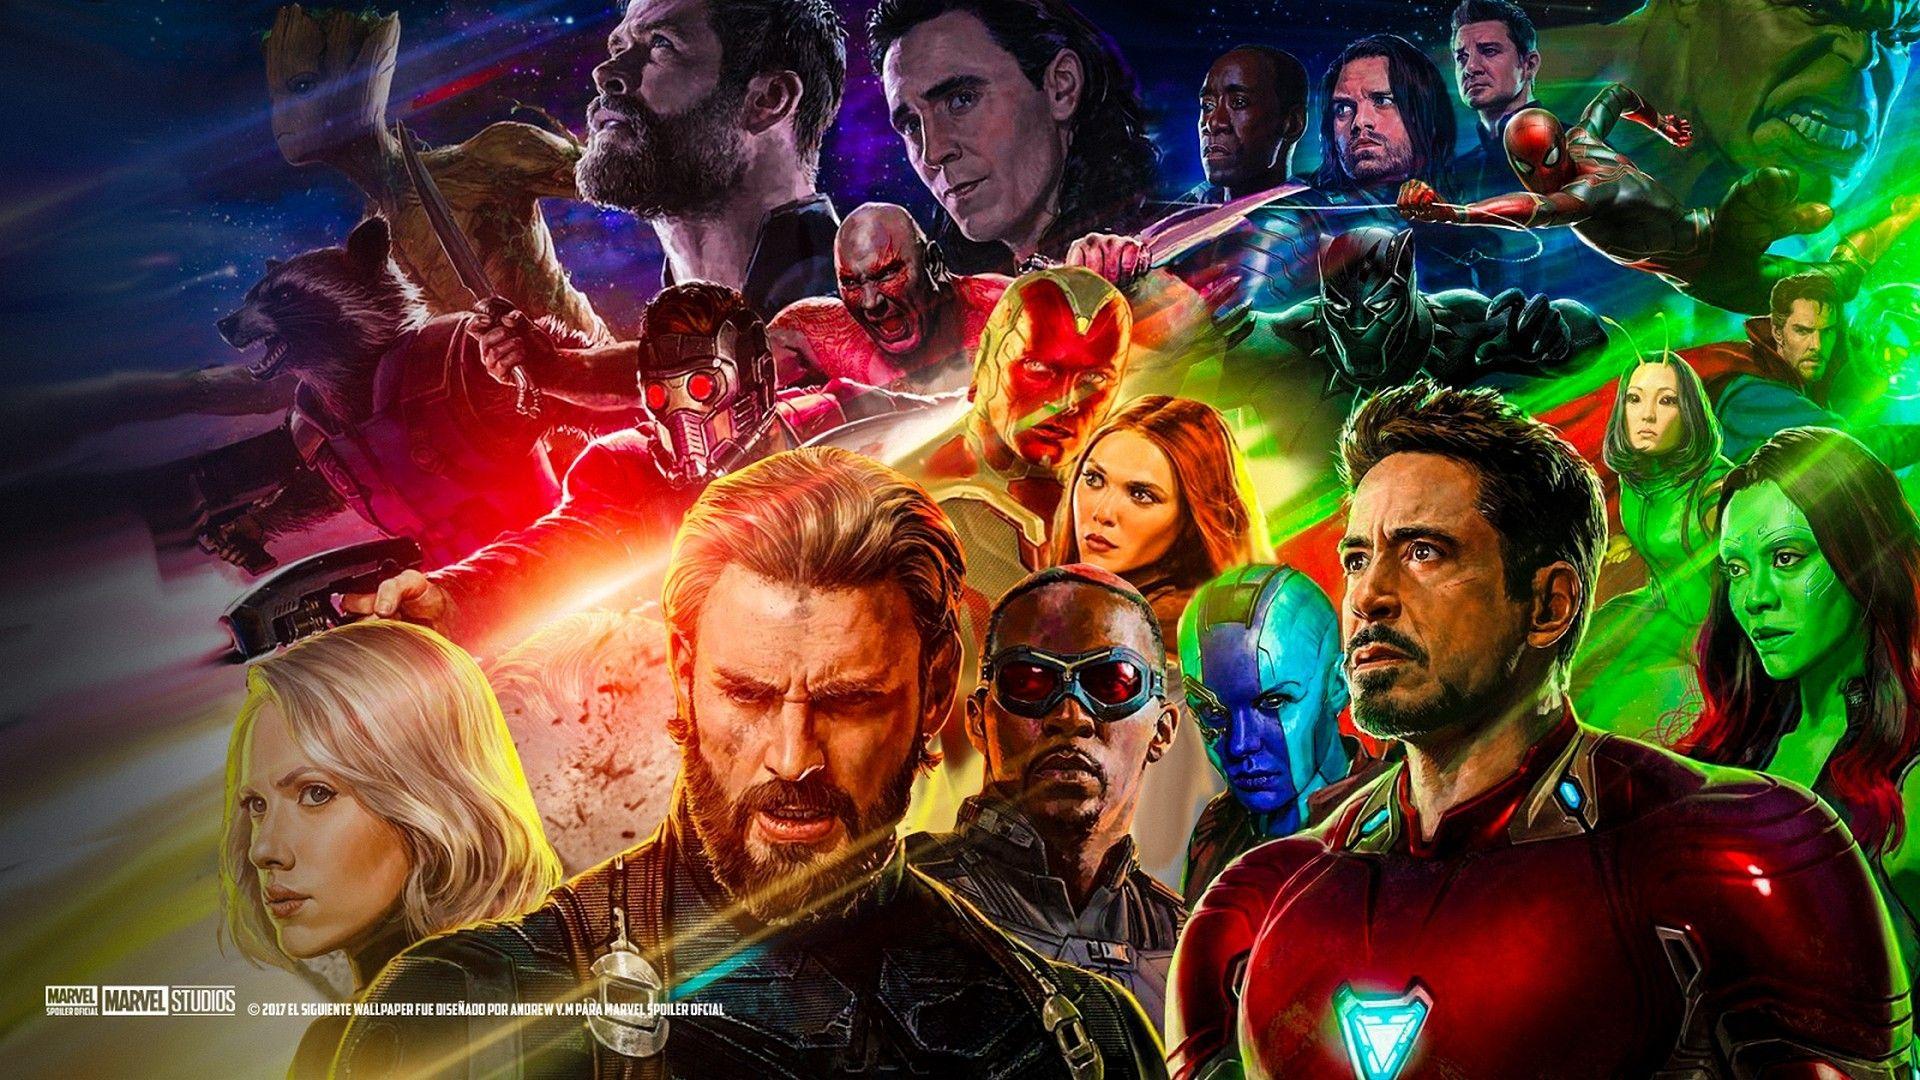 Avengers Infinity War 1920 X 1080 Wallpaper Free Avengers Infinity War 1920 X 1080 Background